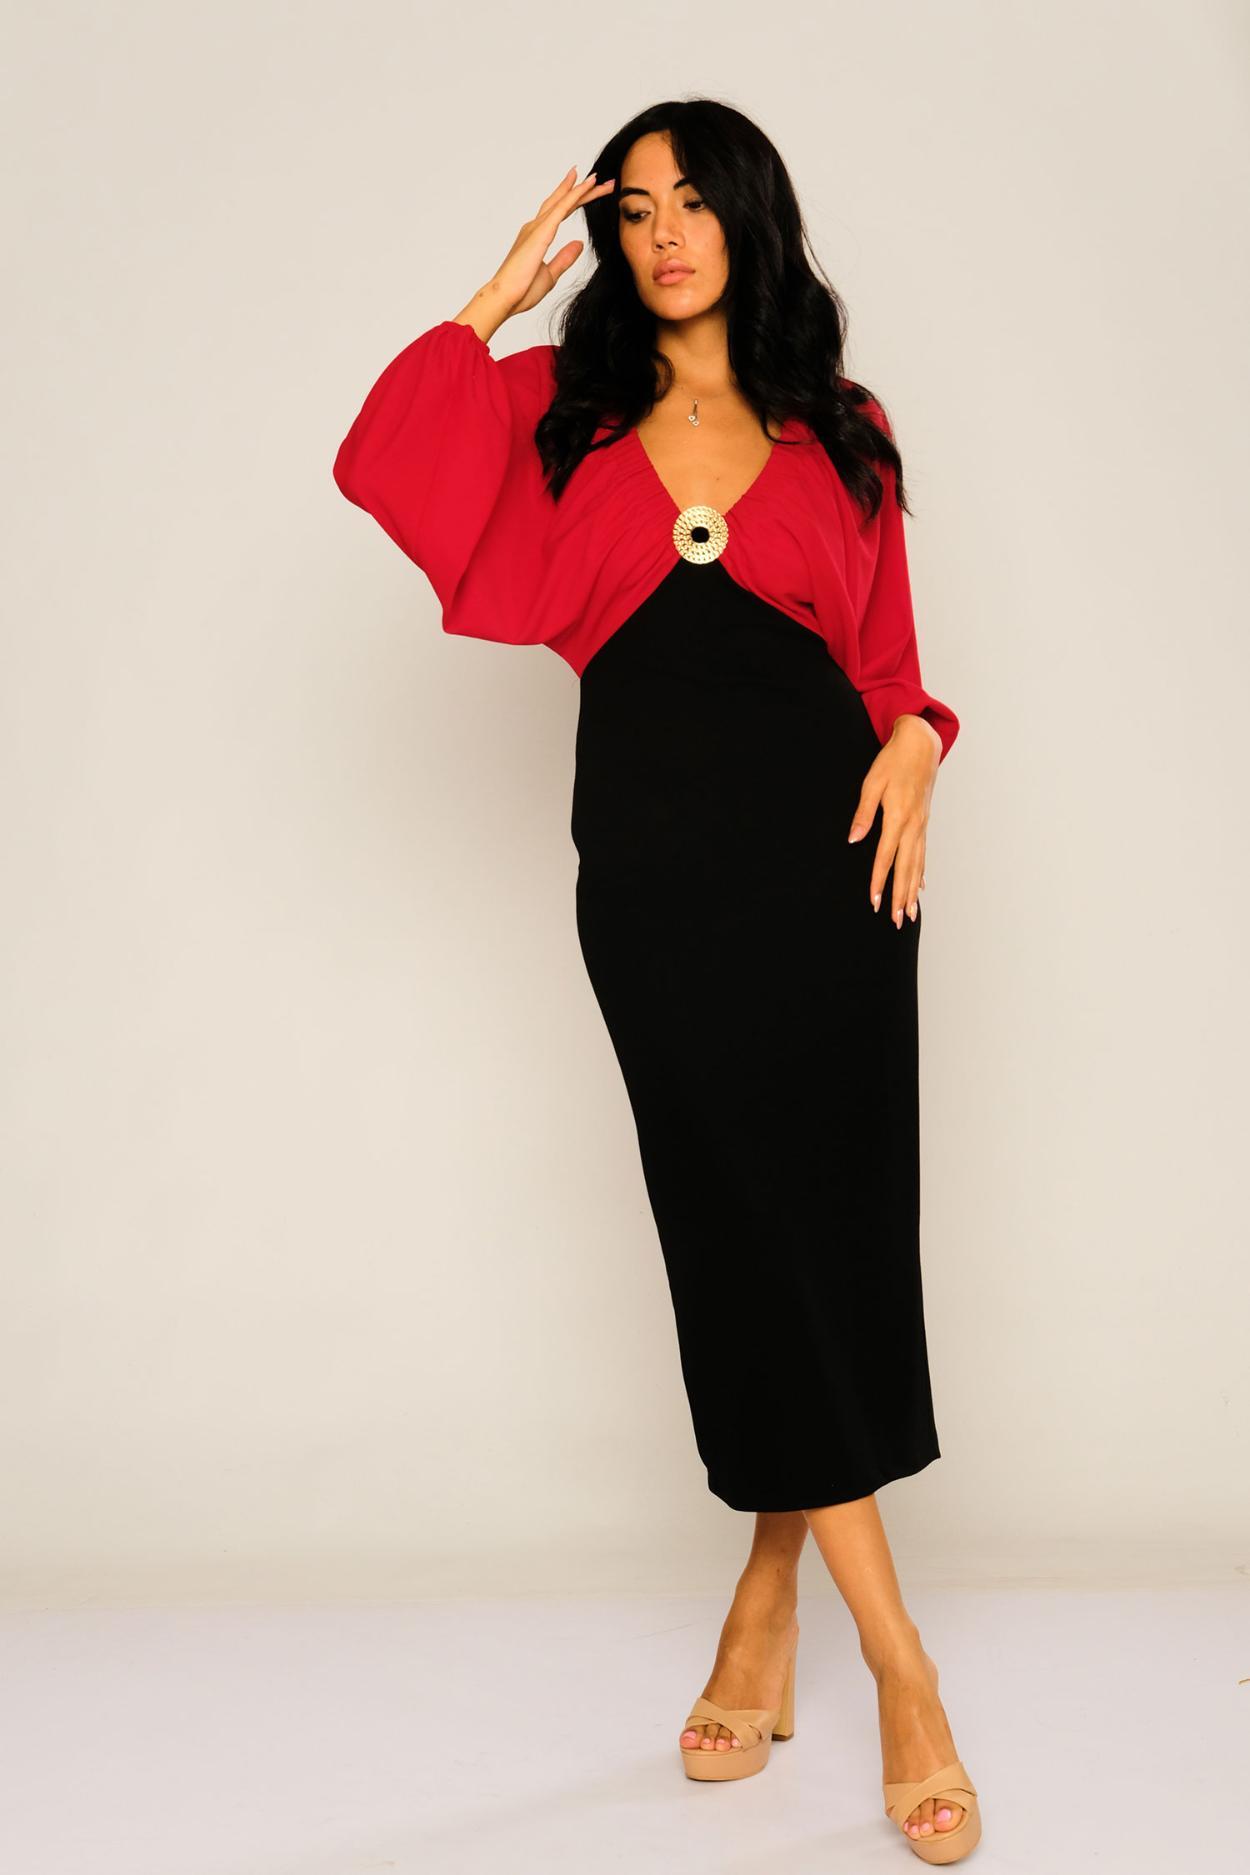 Sleeve Dresses|Fimkastore.com: Casual Rose Wholesale Online Lila Maxi Long Womens Shopping Clothing